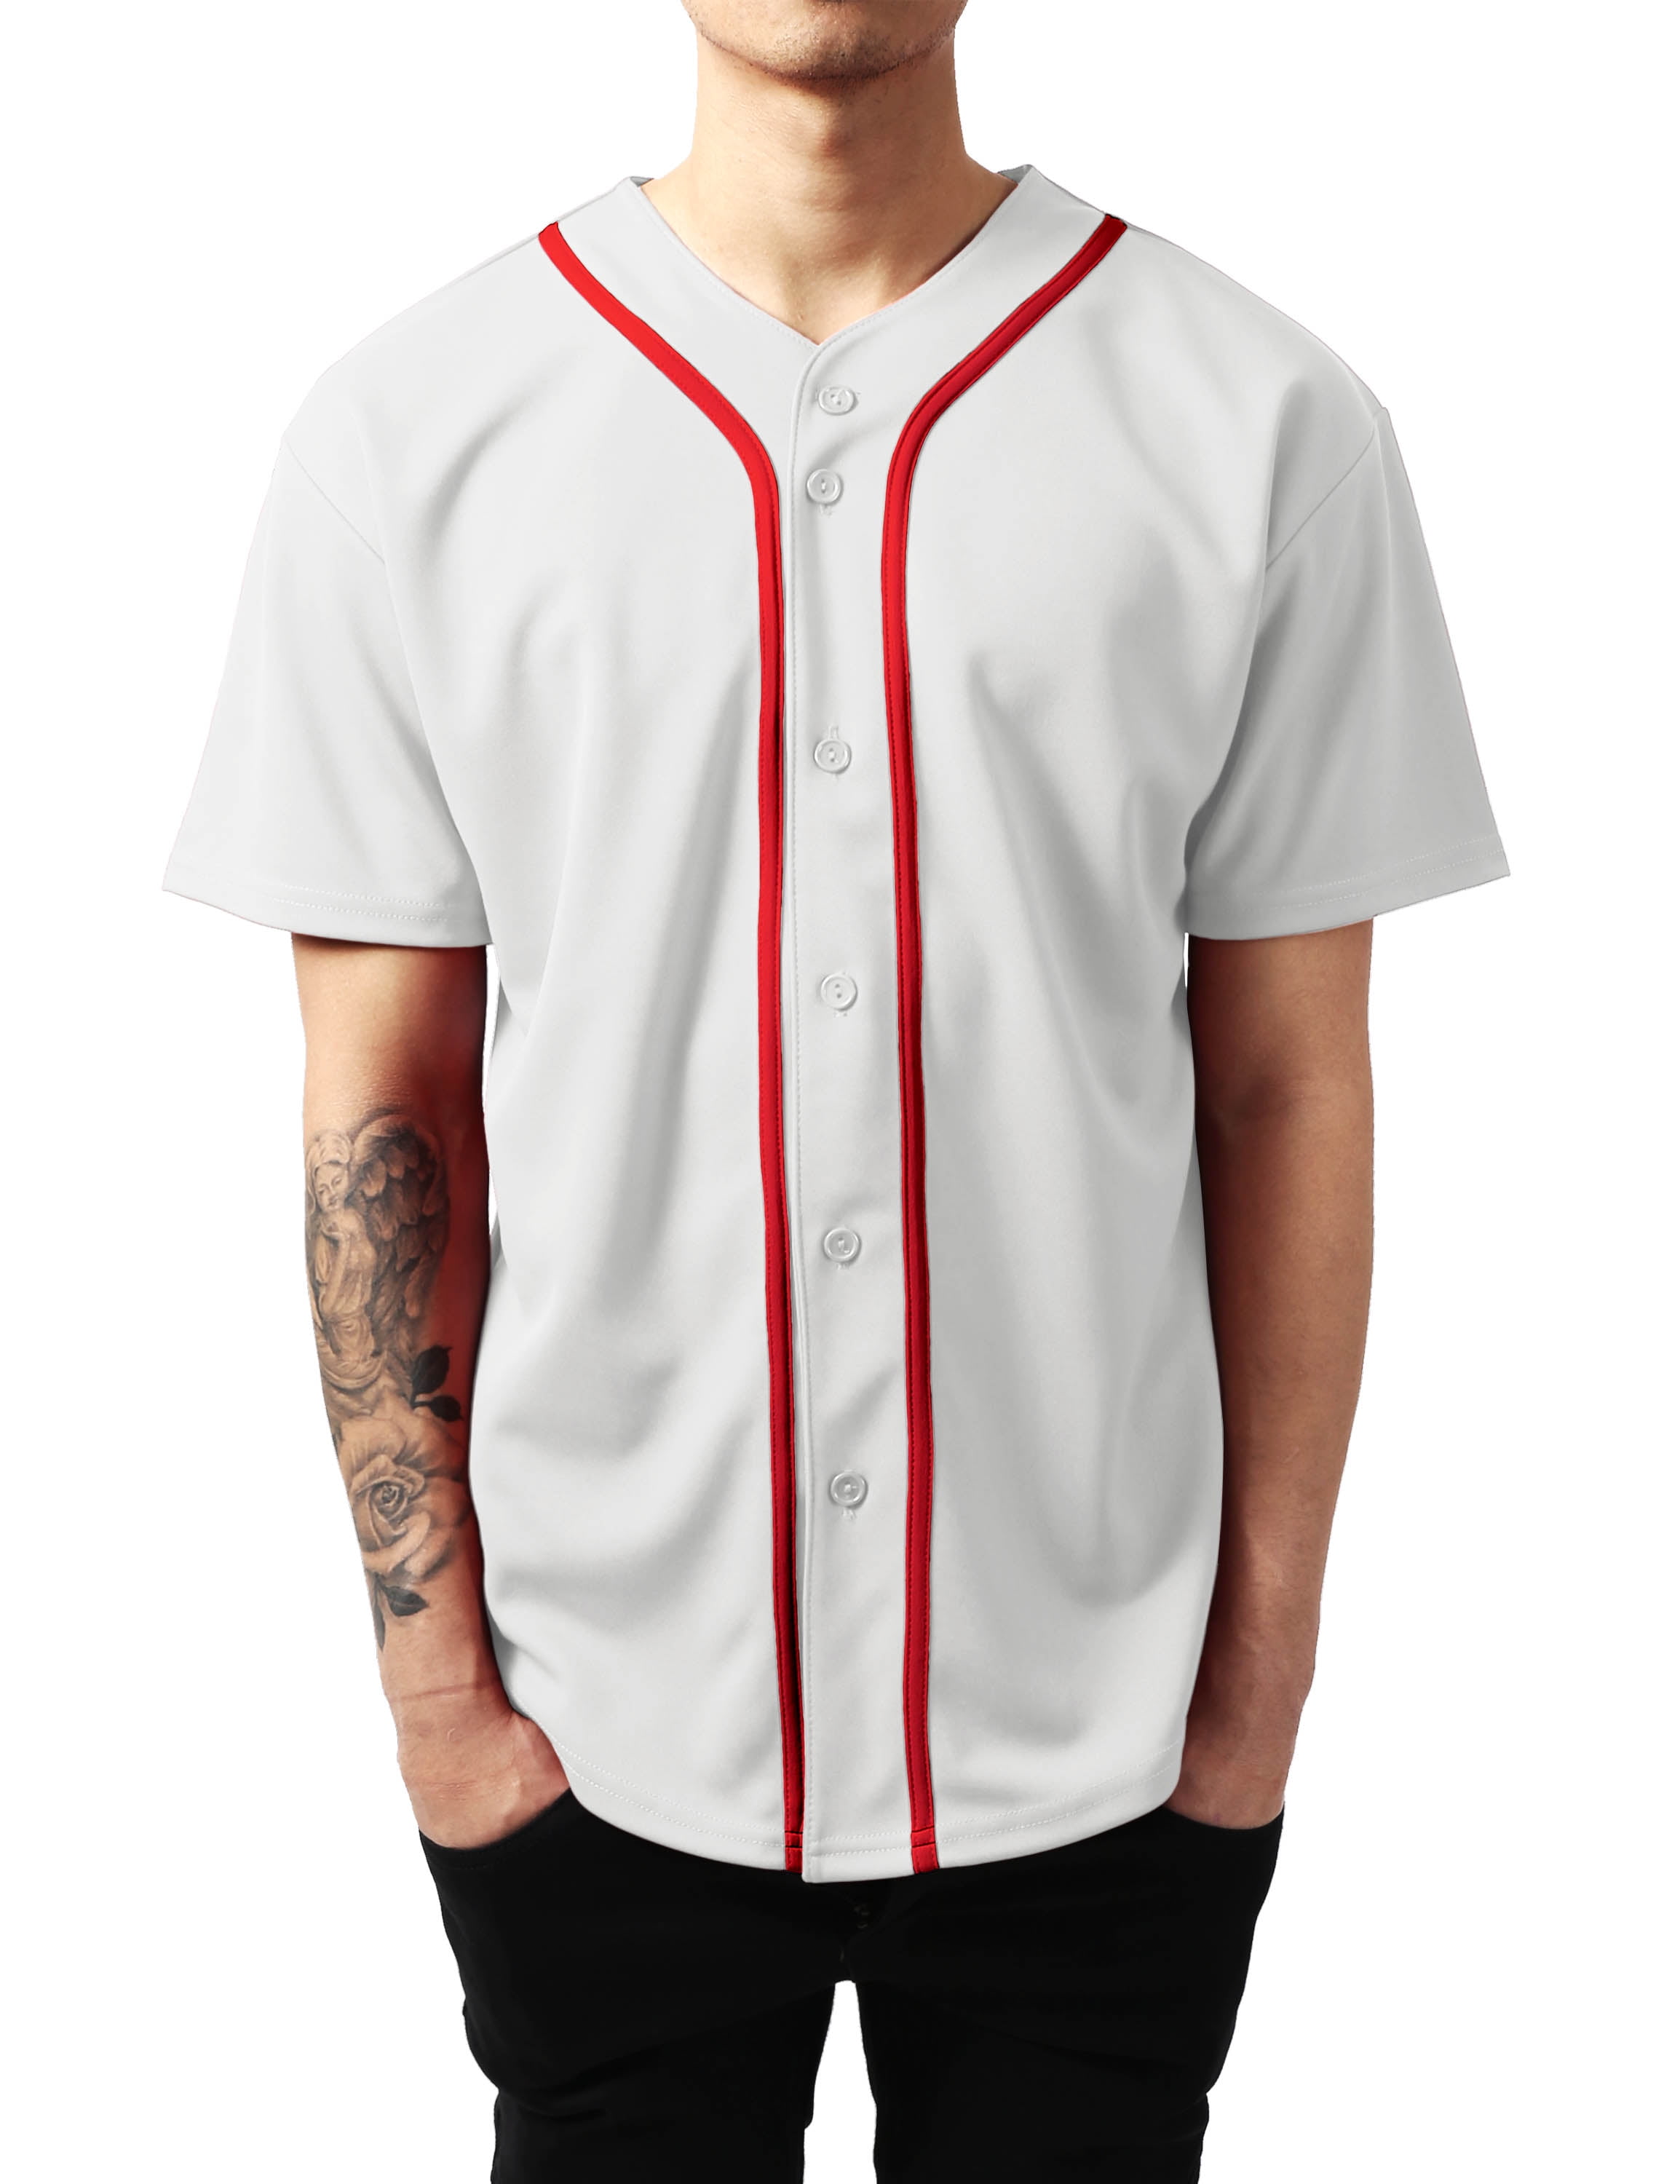 baseball button up jersey